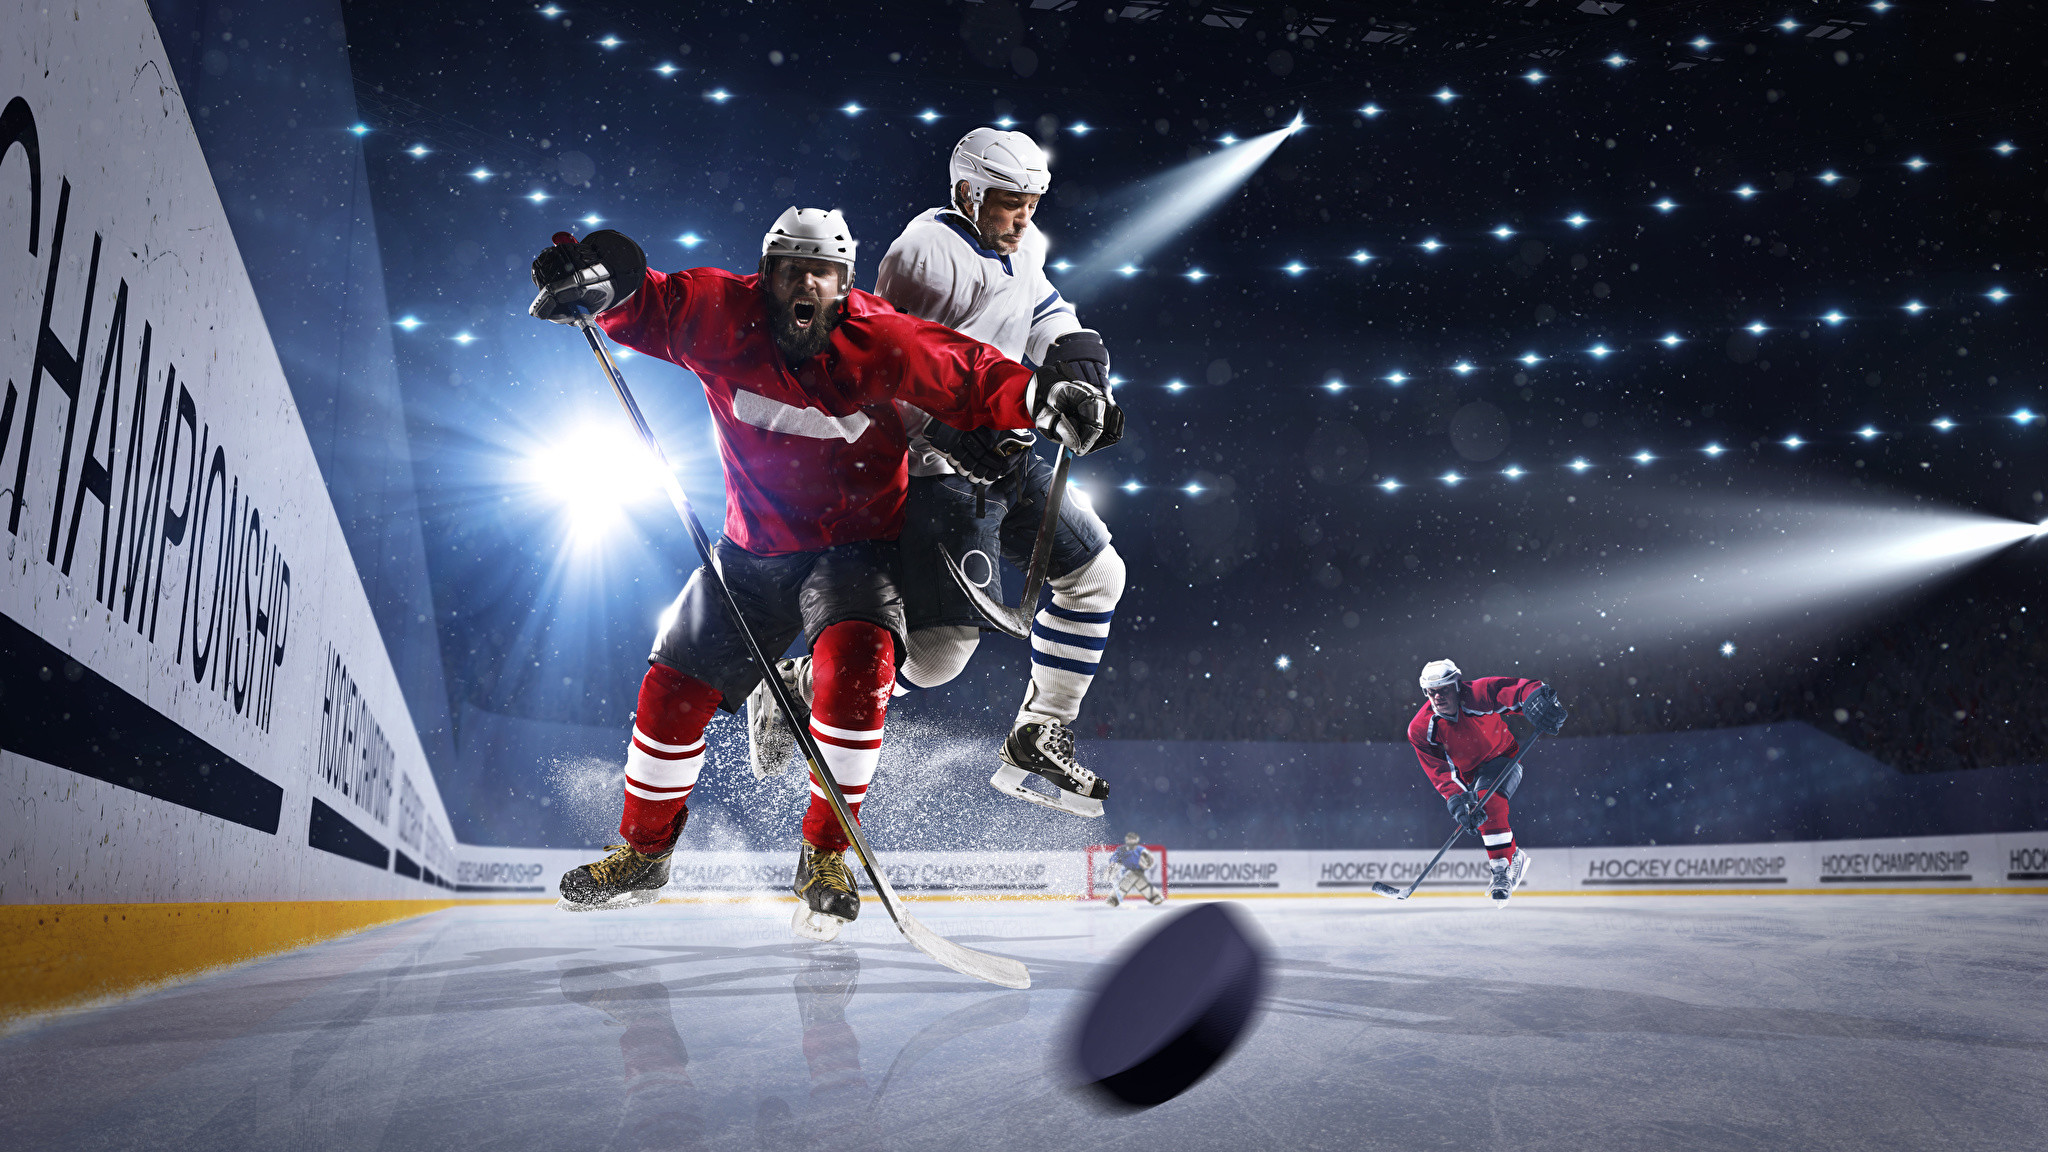 hockey wallpaper,ice hockey,hockey,stick and ball games,bandy,team sport